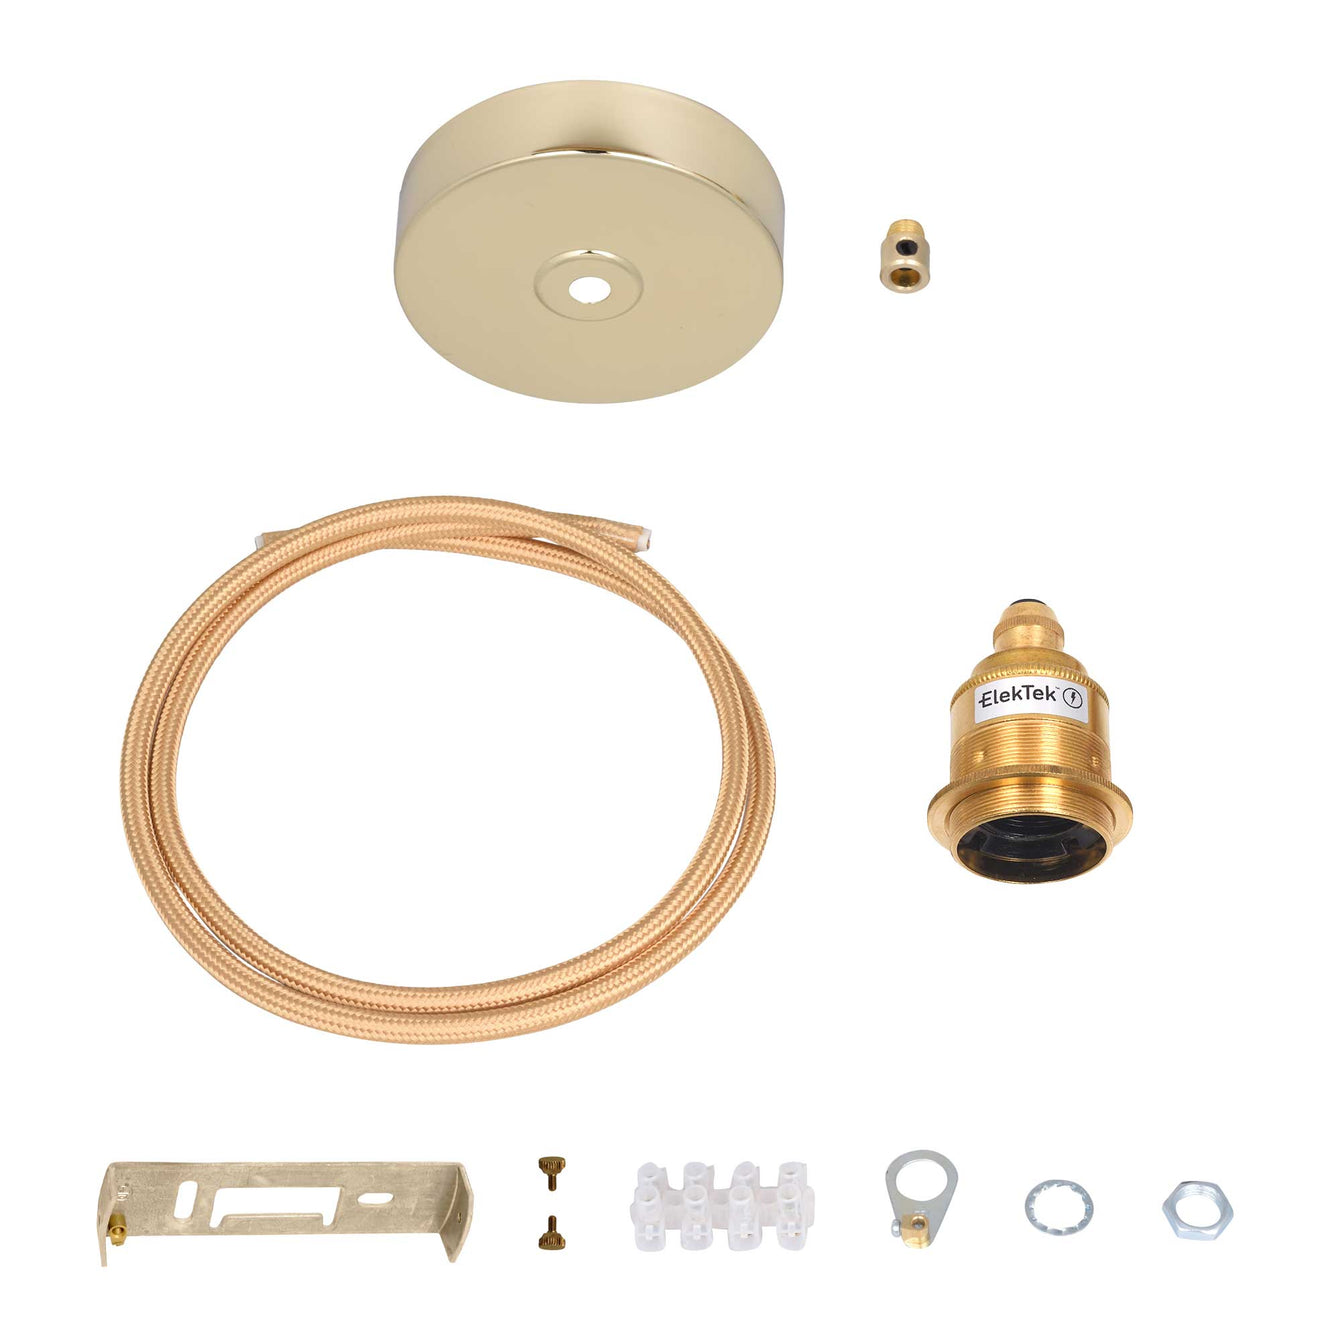 ElekTek Premium Pendant Light Kit DIY 100mm Flat Top Ceiling Rose, Round Flex and Lamp Holder E27 Shade Ring Cord Grip - Buy It Better Antique Brass